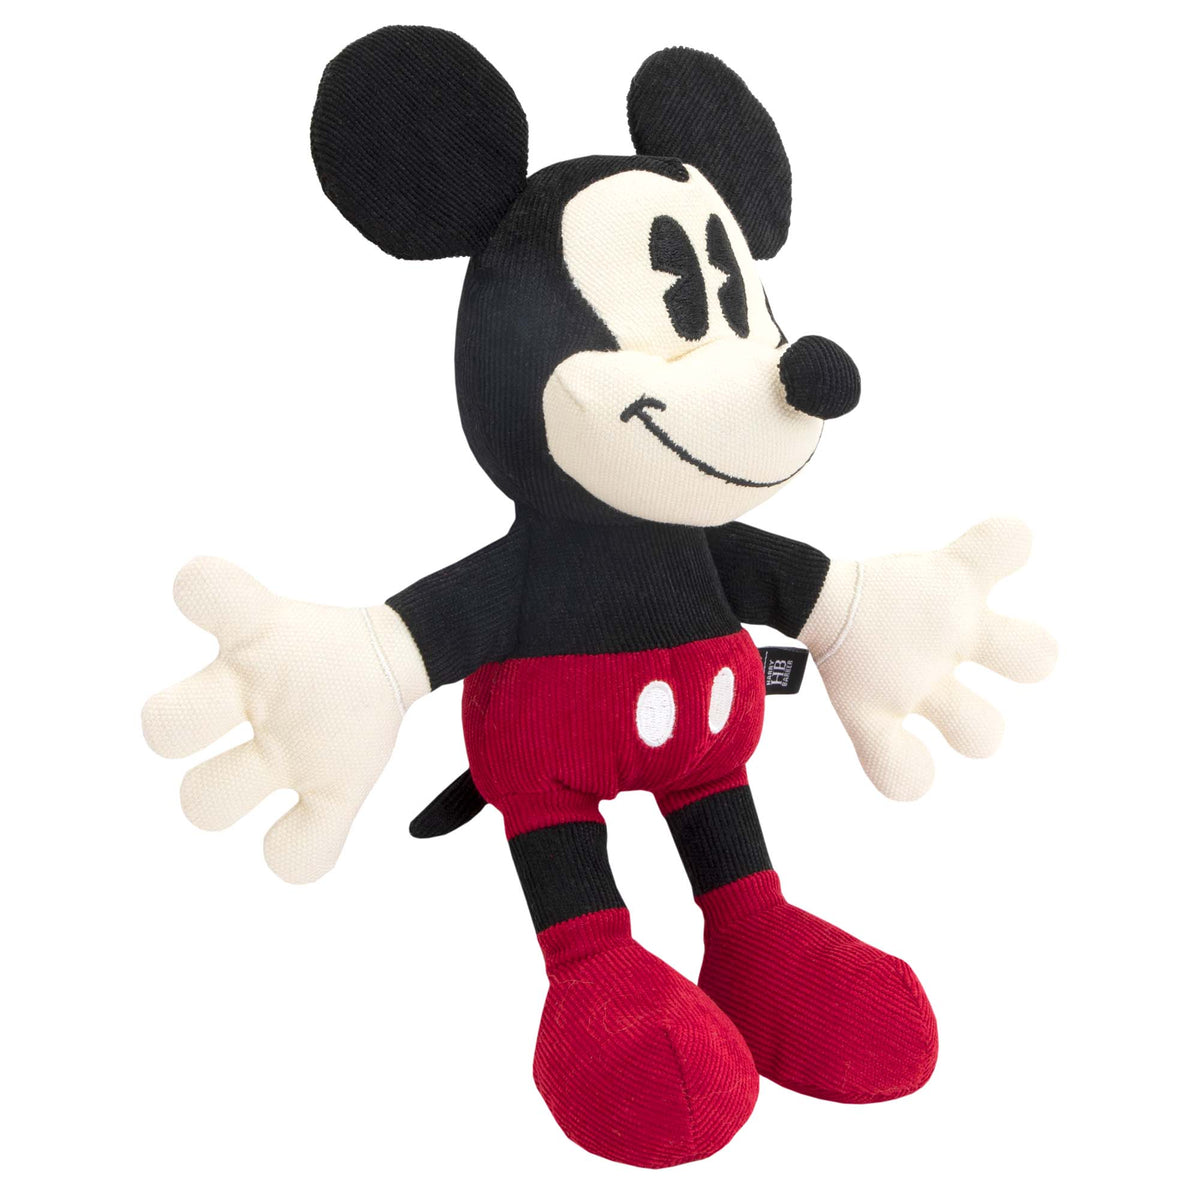 Vintage Mickey Plush Toy